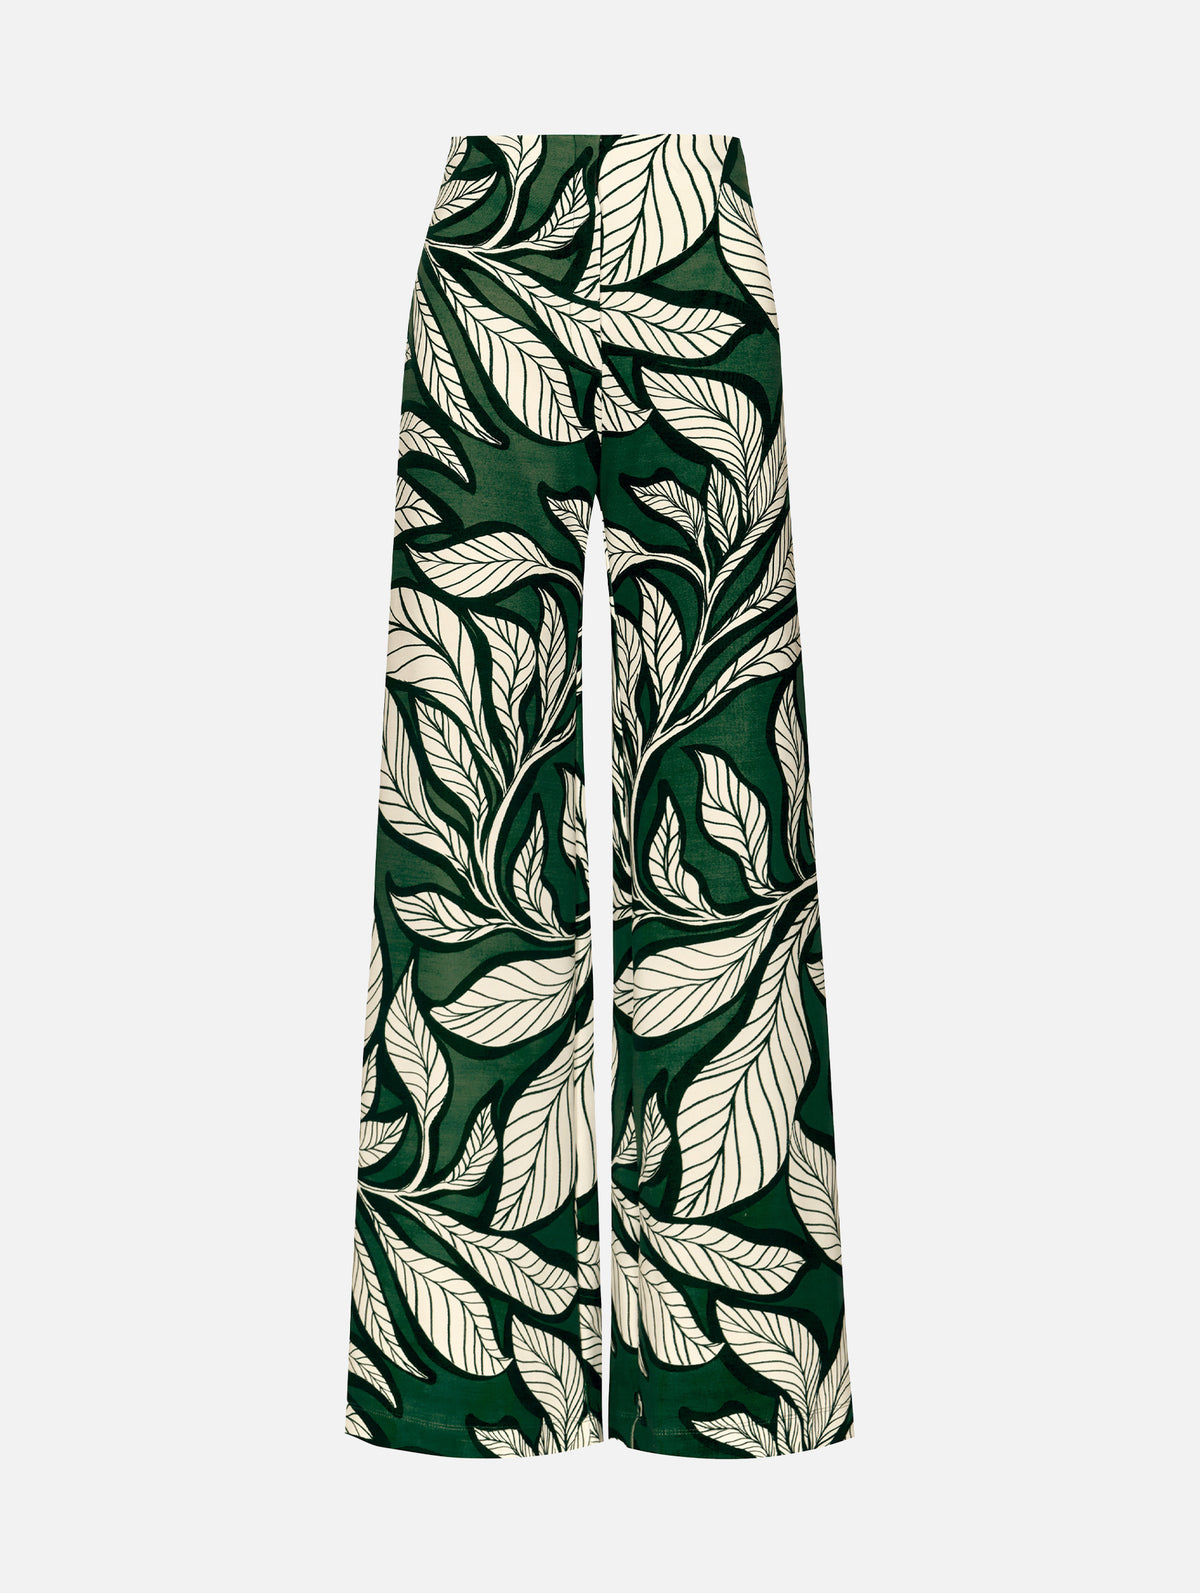 Mijita Pants in Pine Green Leaves